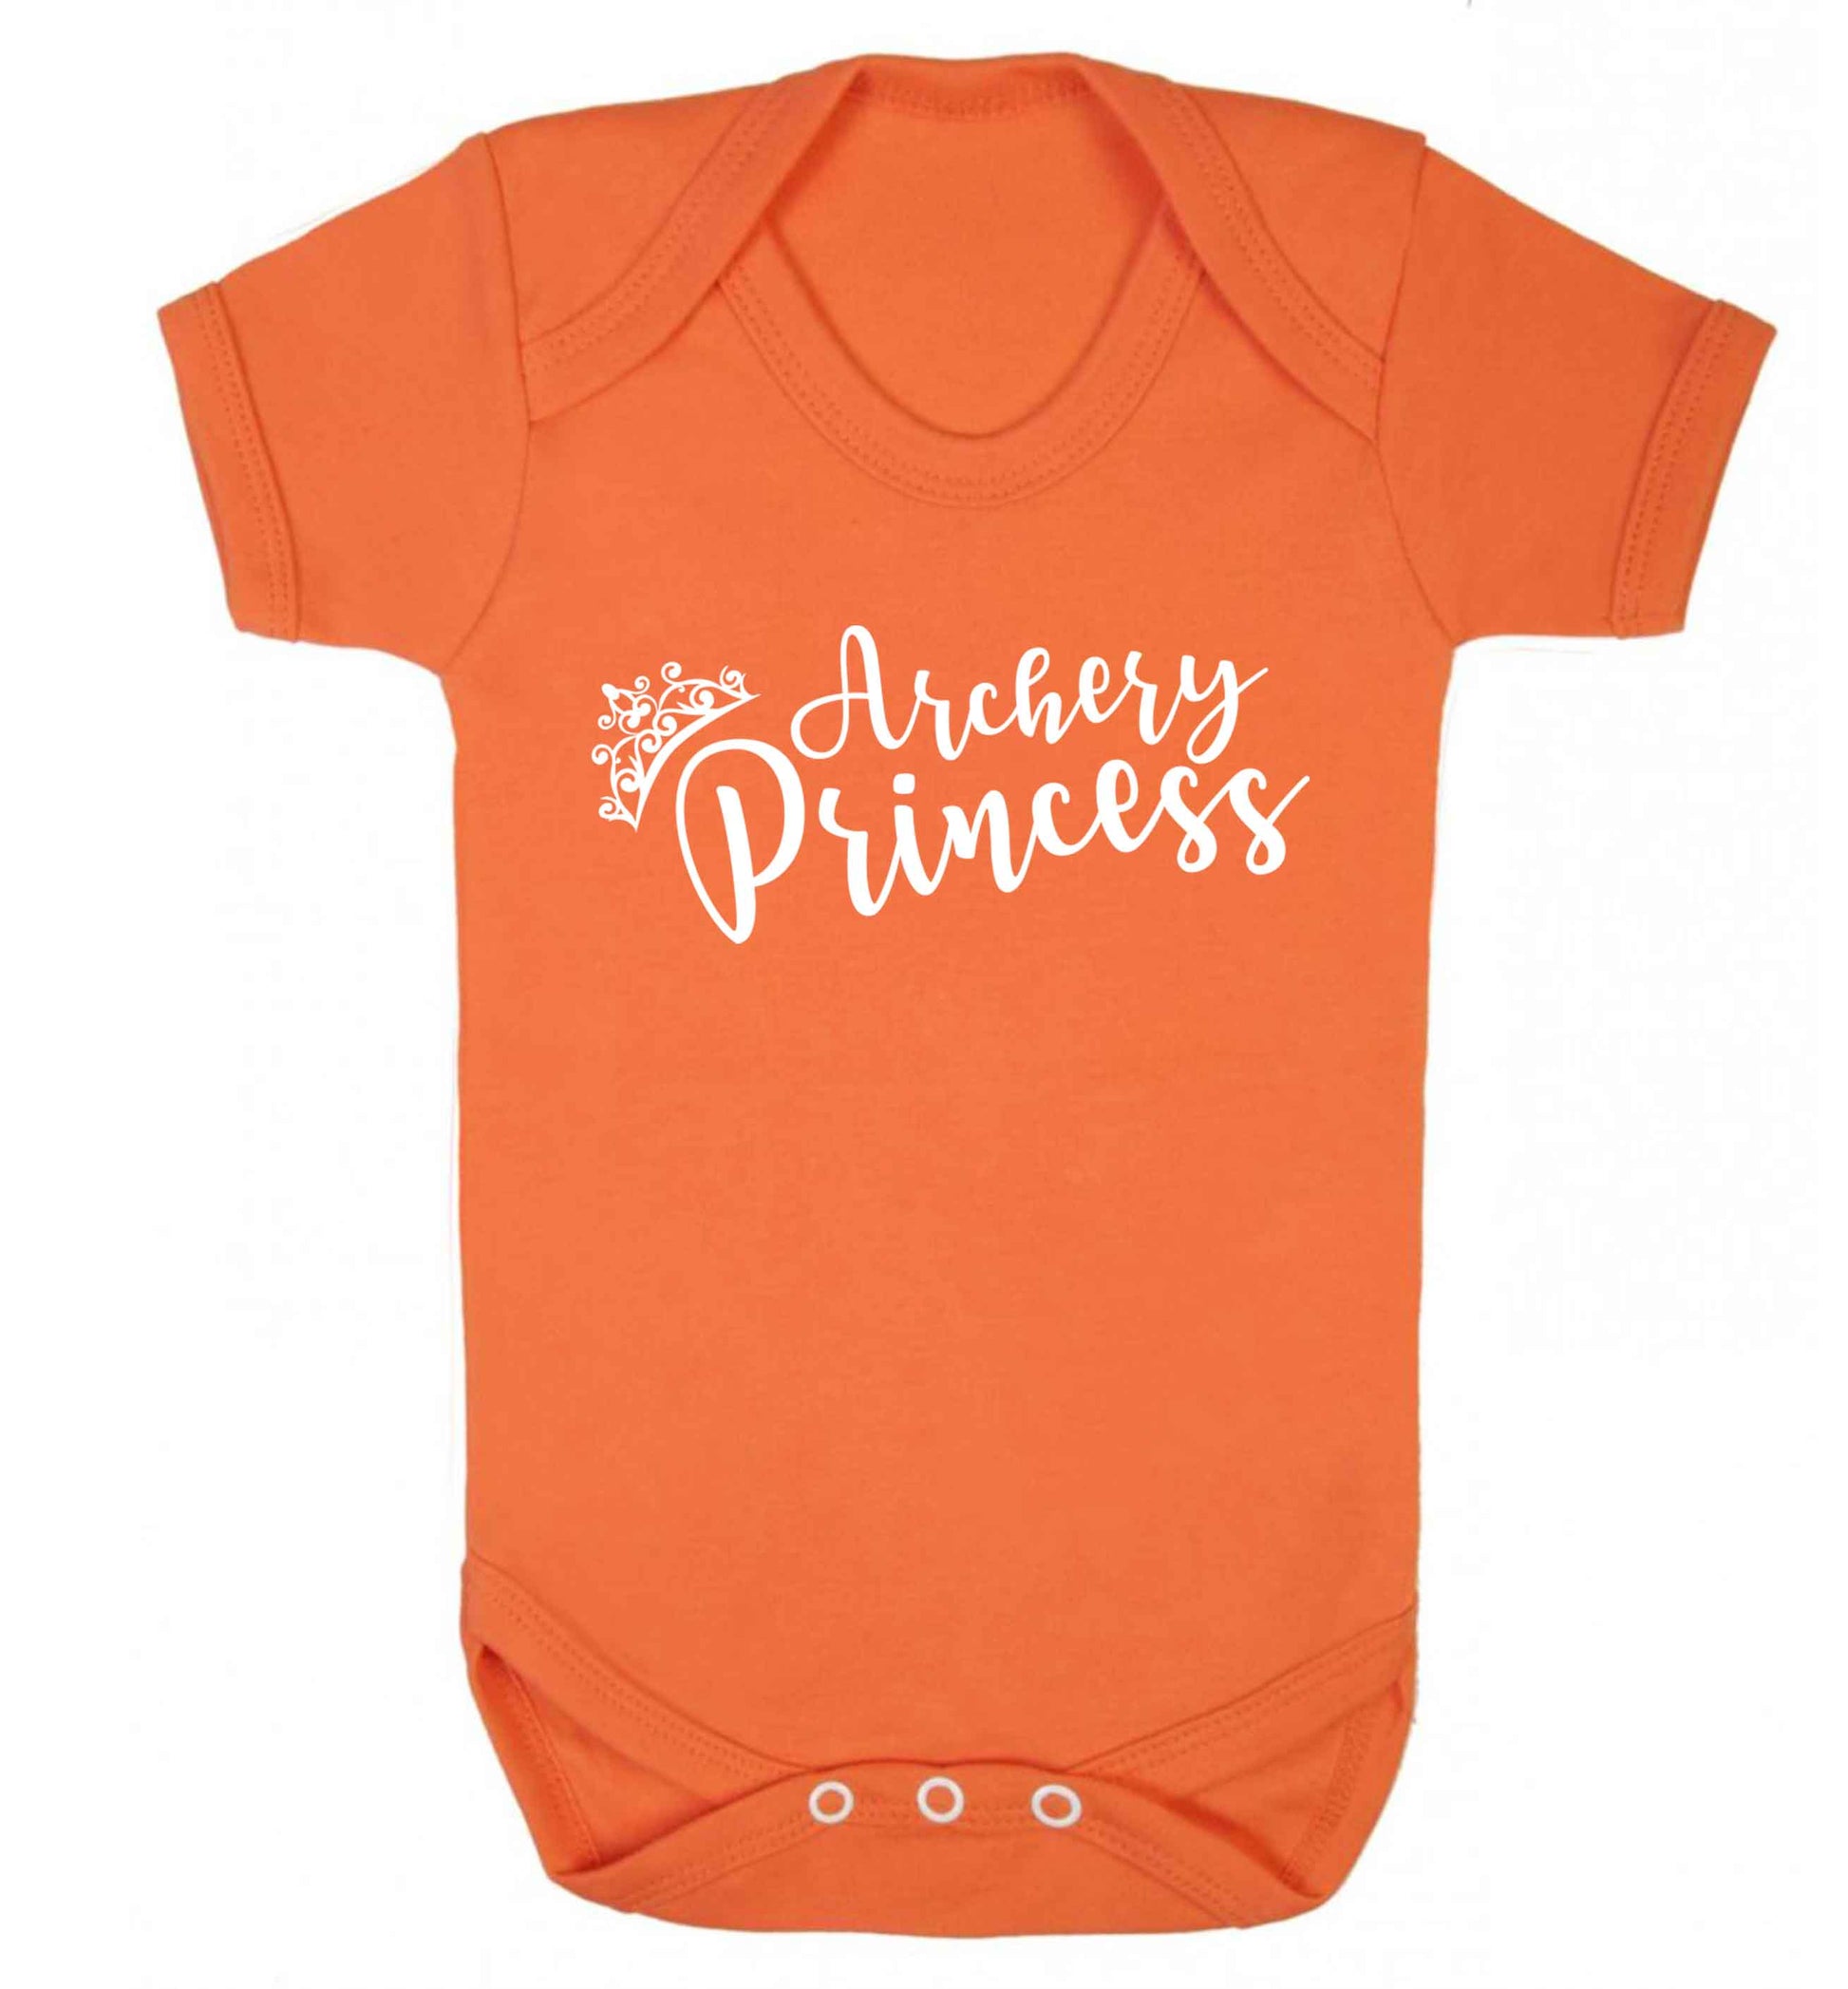 Archery princess Baby Vest orange 18-24 months